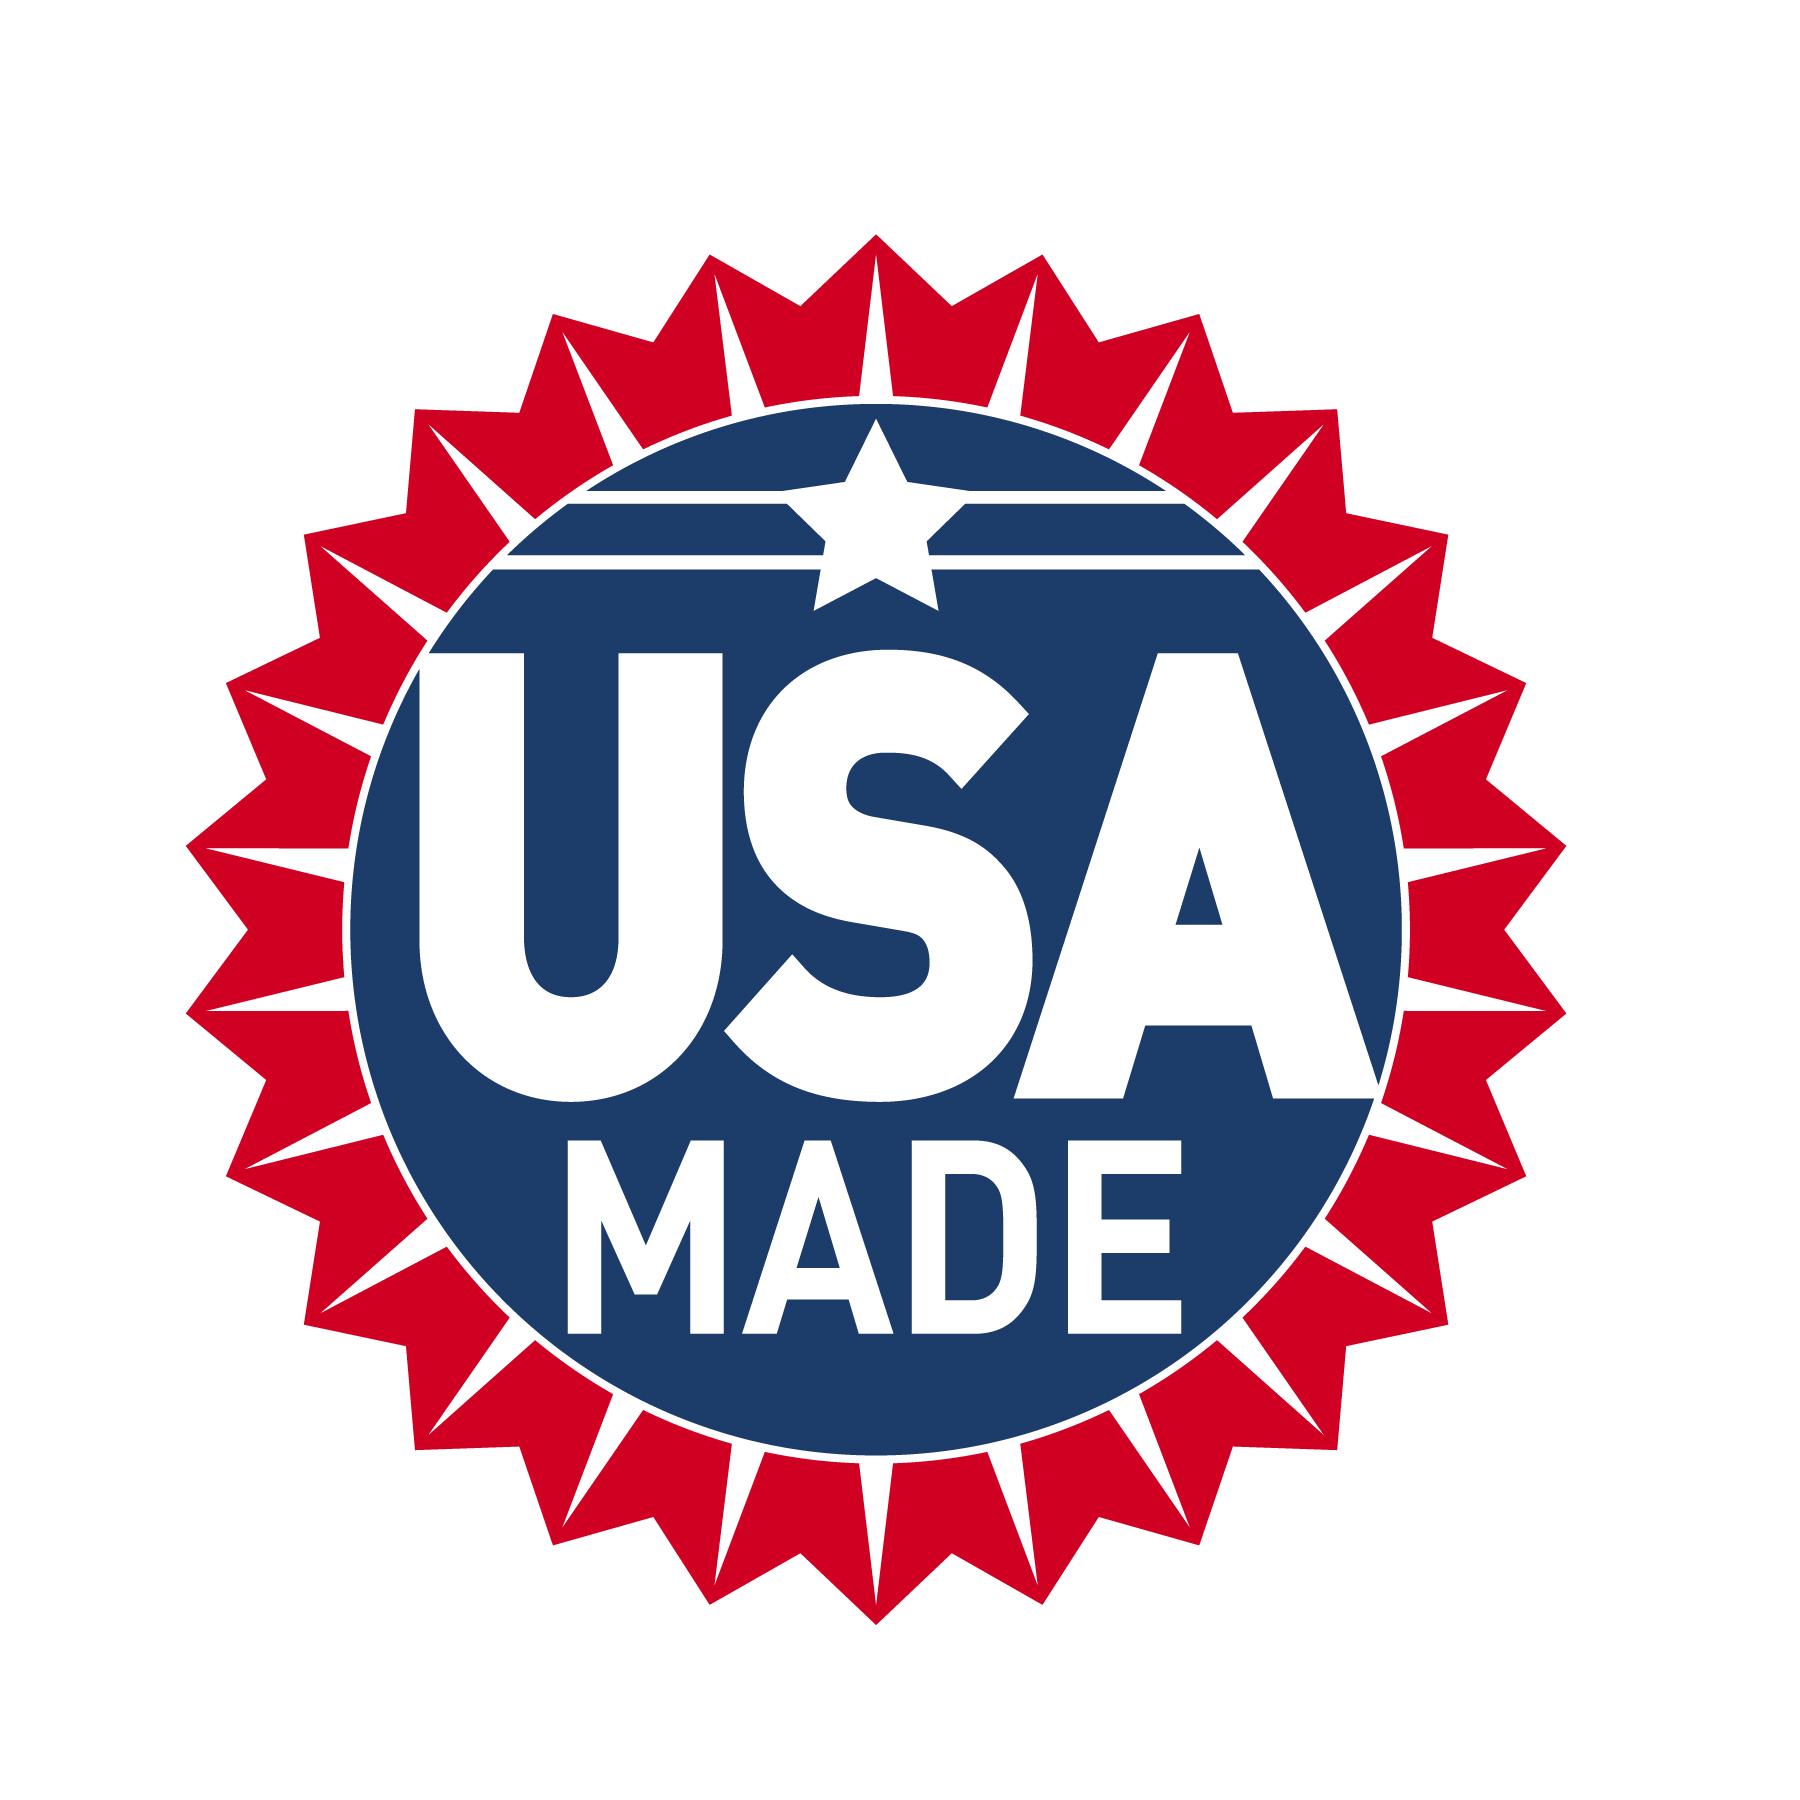 Made in USA Logo - Made in USA Logo Design | Dowload Vector Art | Royalty-Free